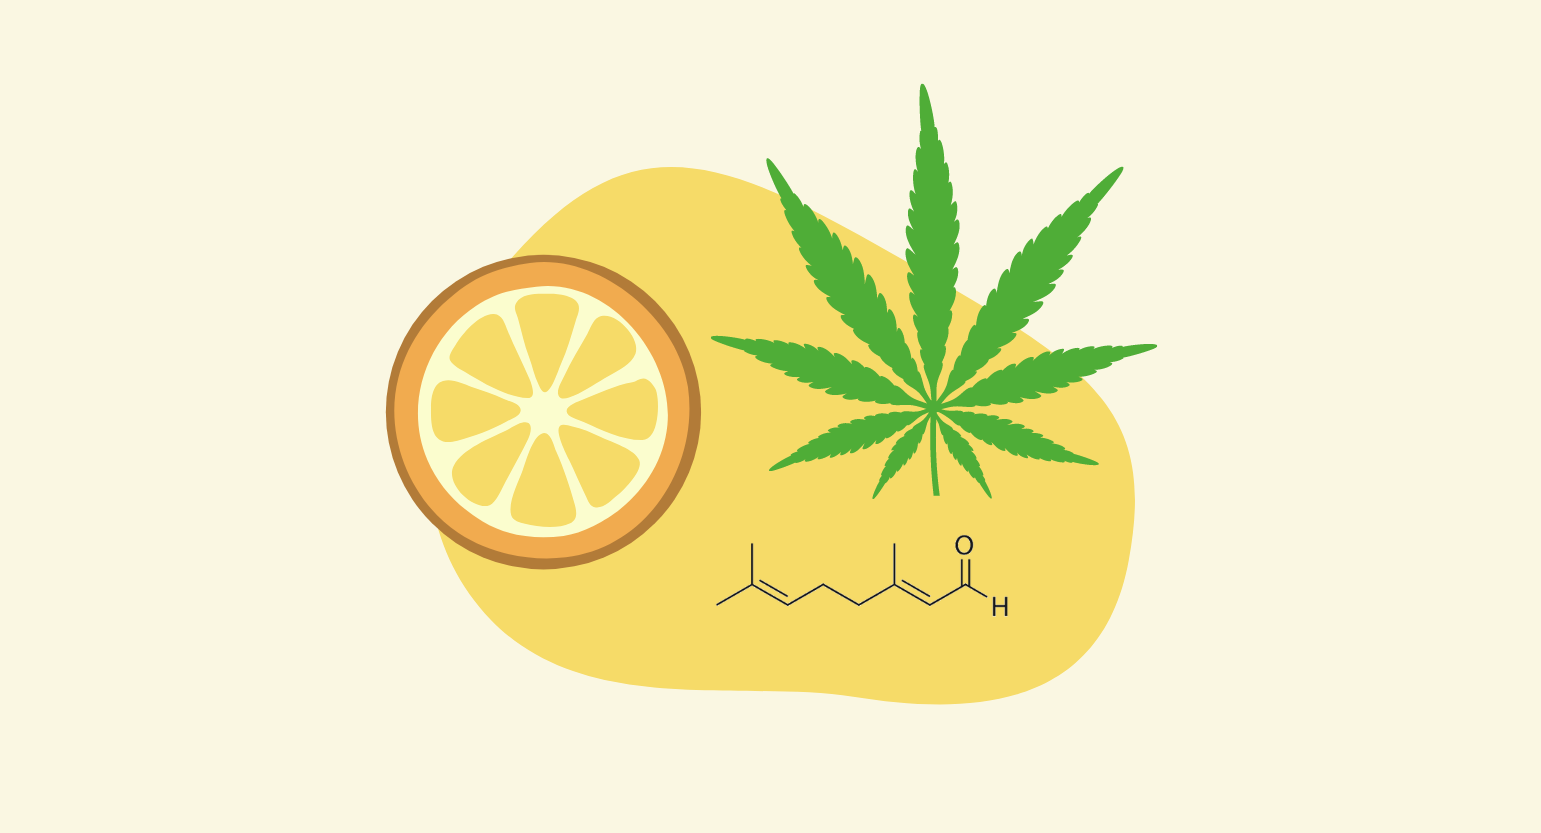 citral molecule and cannabis leaf illustration